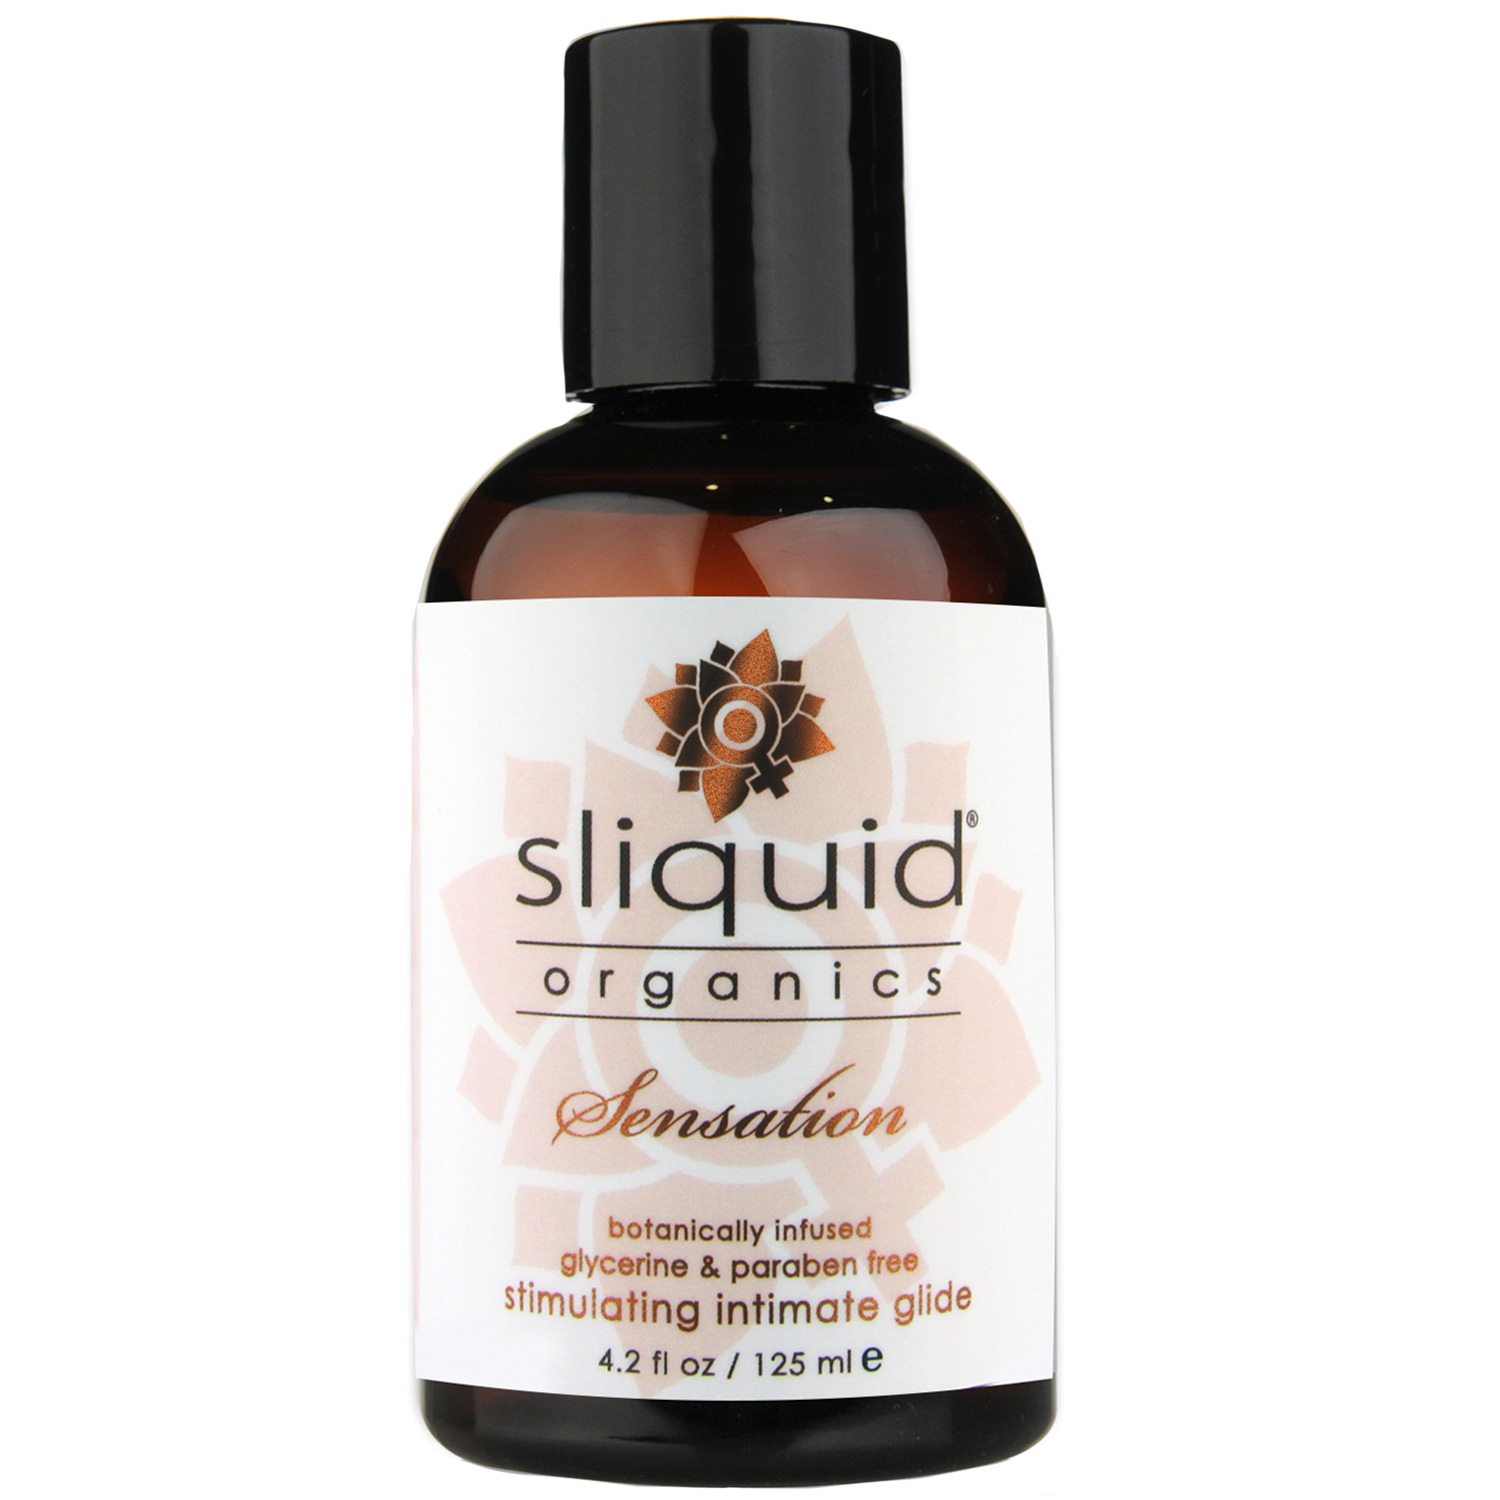 Sliquid Organic Sensations Glidecreme 125 ml     - Klar